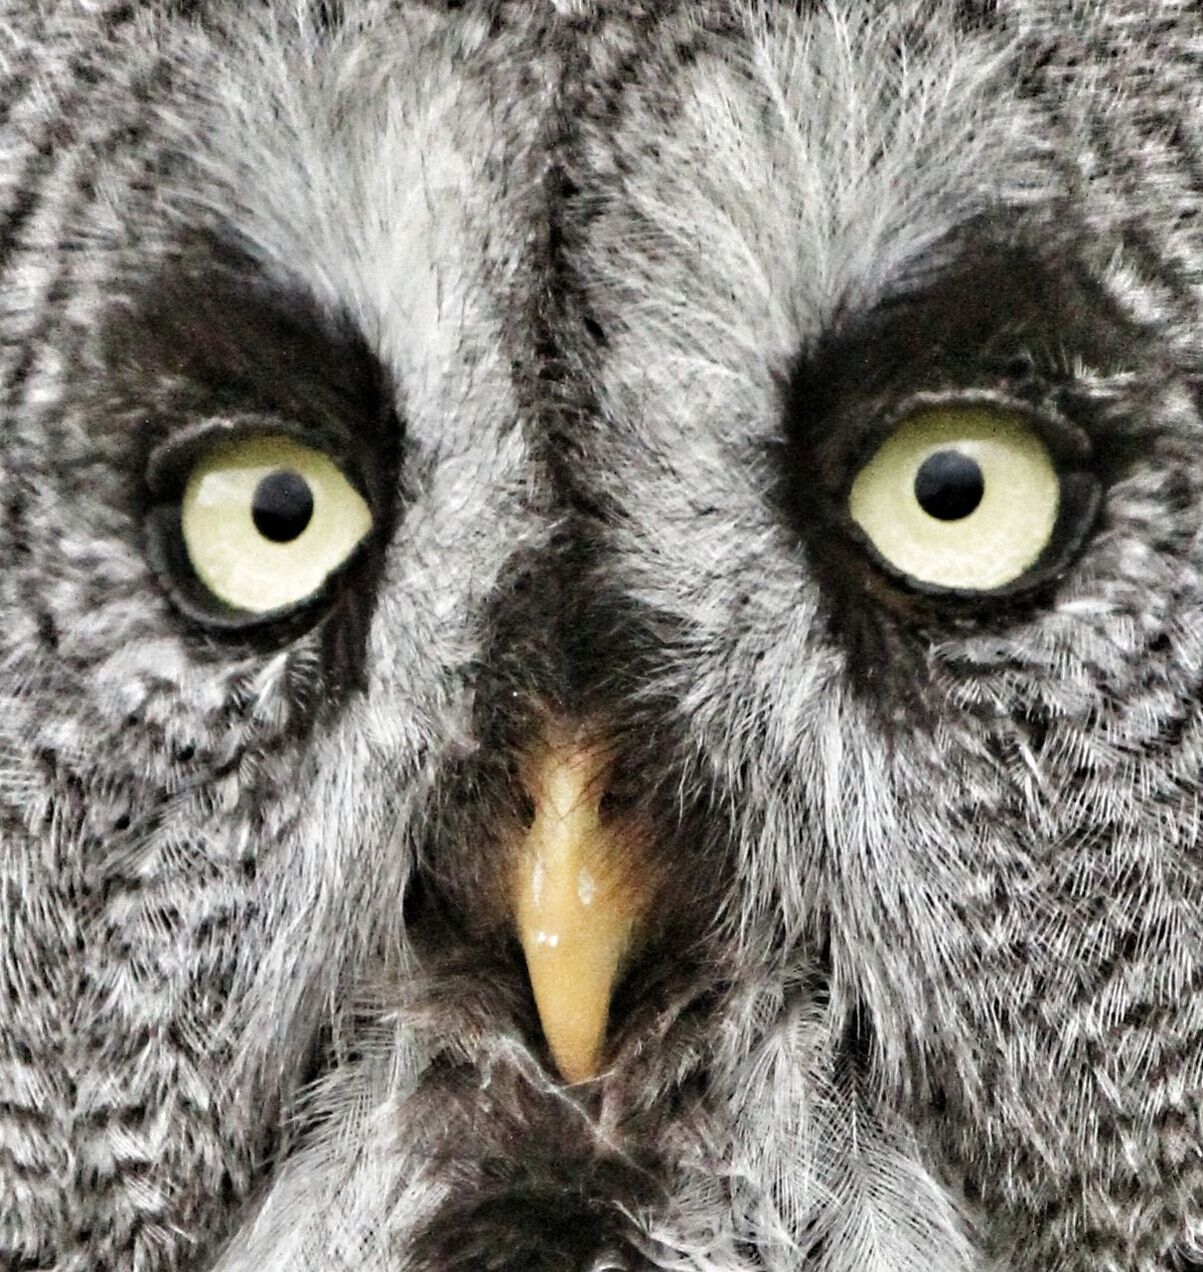 PORTRAIT OF OWL OUTDOORS